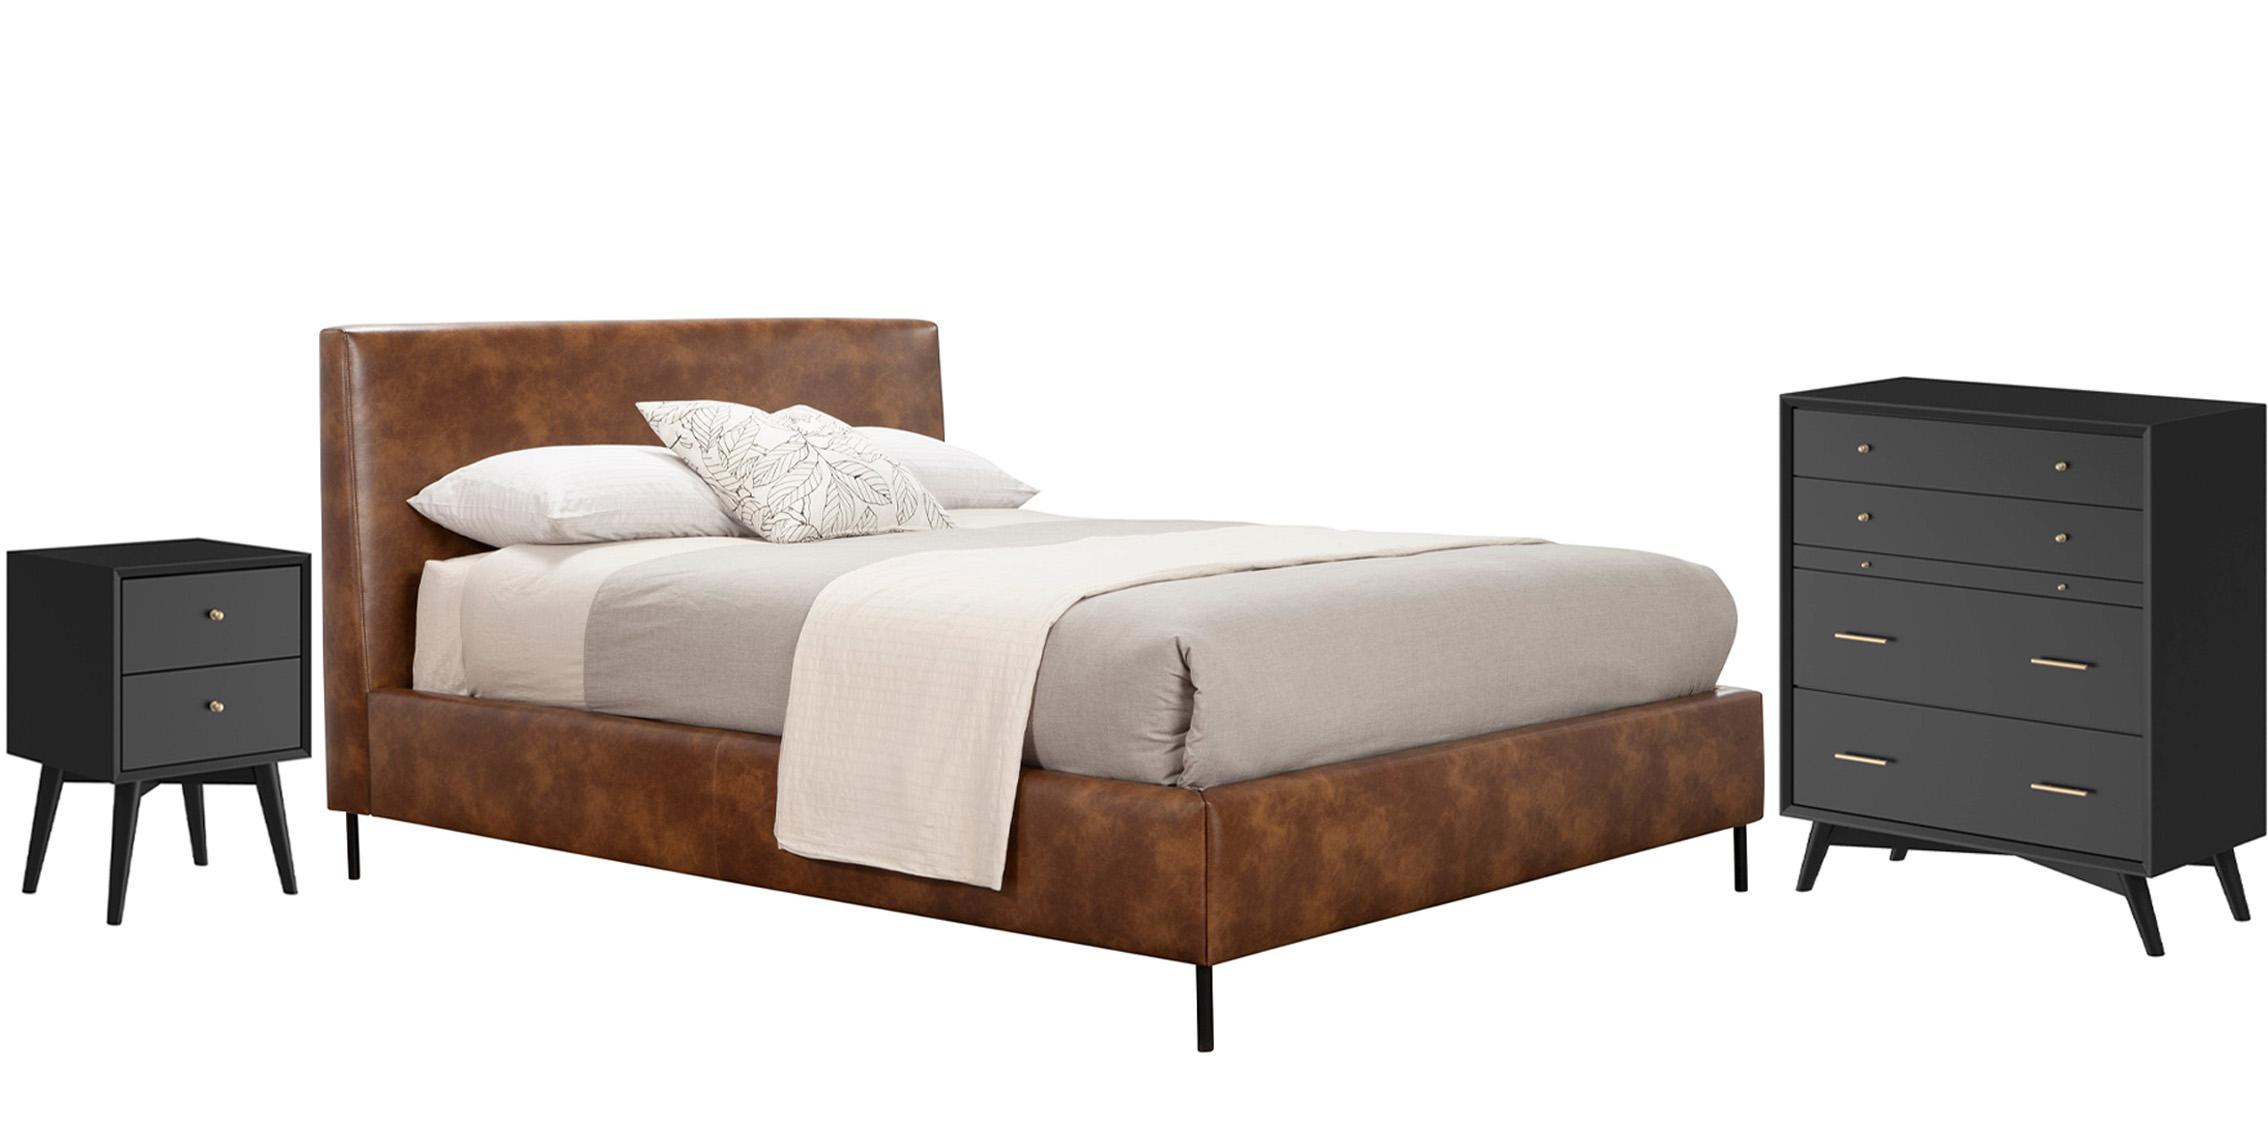 Modern, Rustic Platform Bedroom Set SOPHIA/FLYNN 6902CK-BRN-Set-3-BLK in Brown, Black Faux Leather